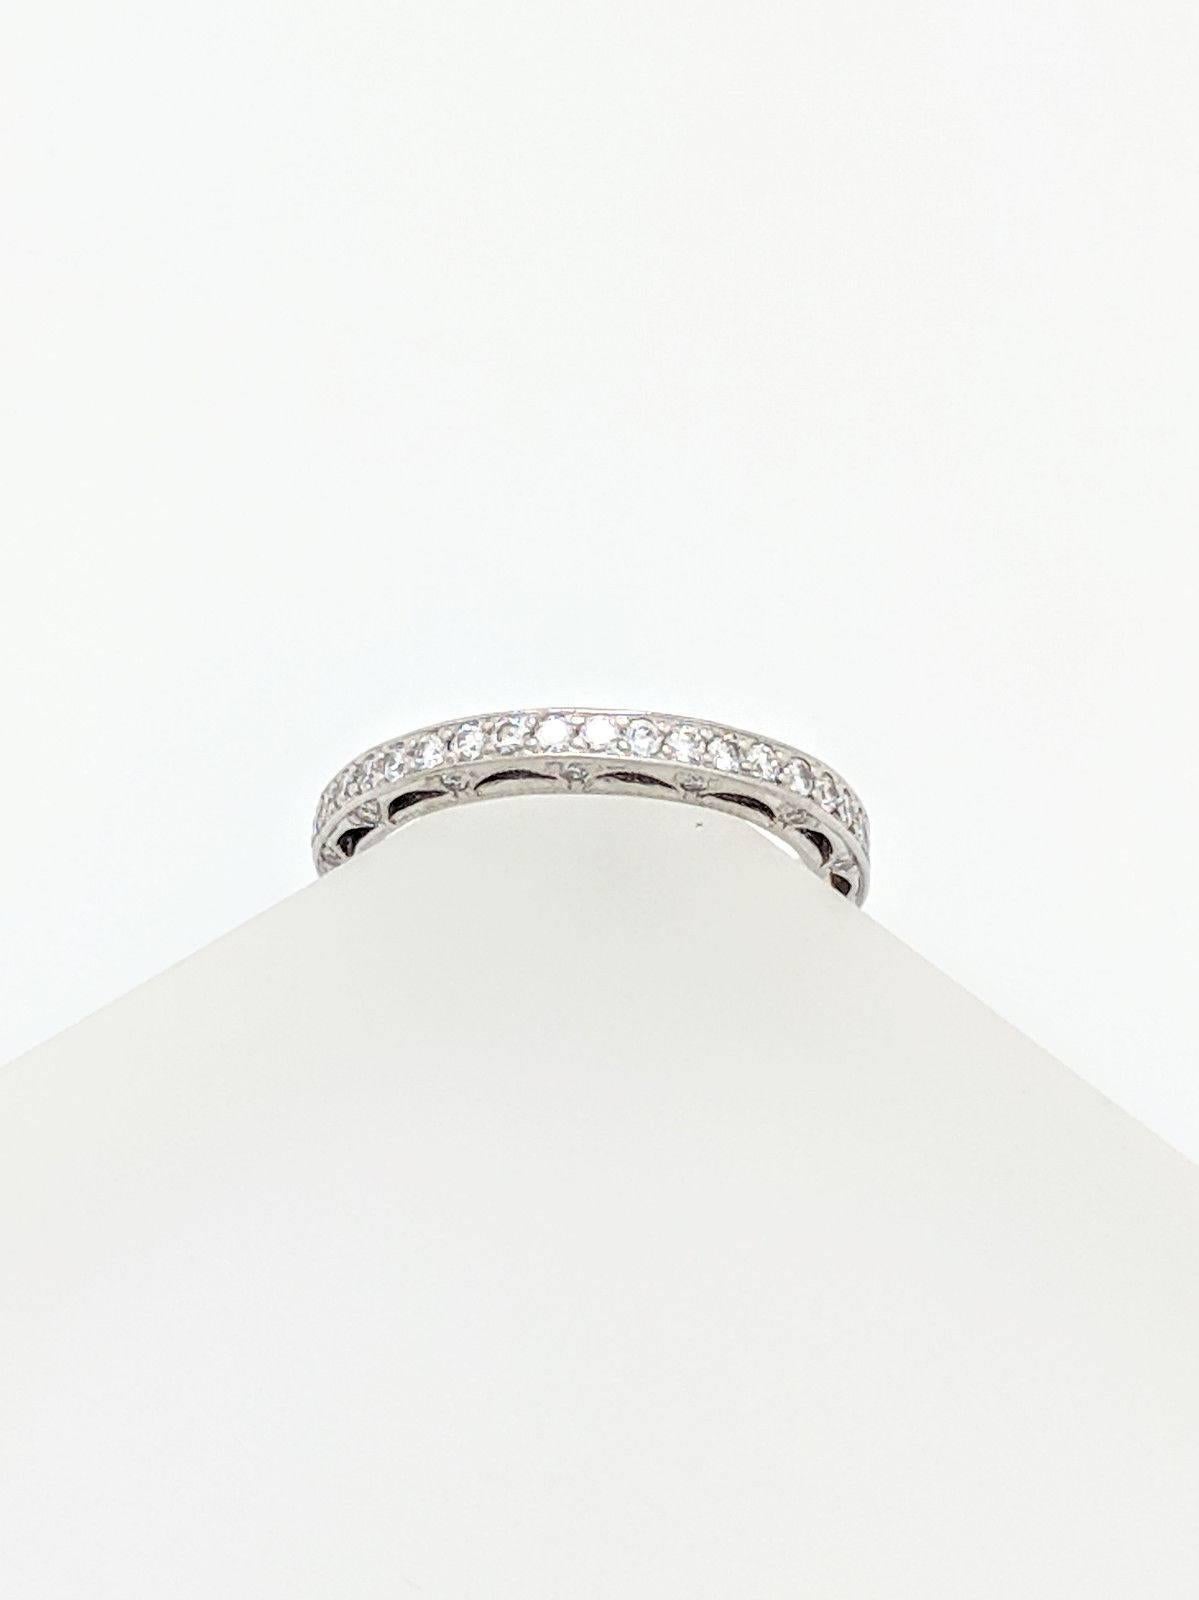 Platinum Tacori 1.05ct Cushion Cut Diamond Engagement Ring, Matching Band SI1/G 5